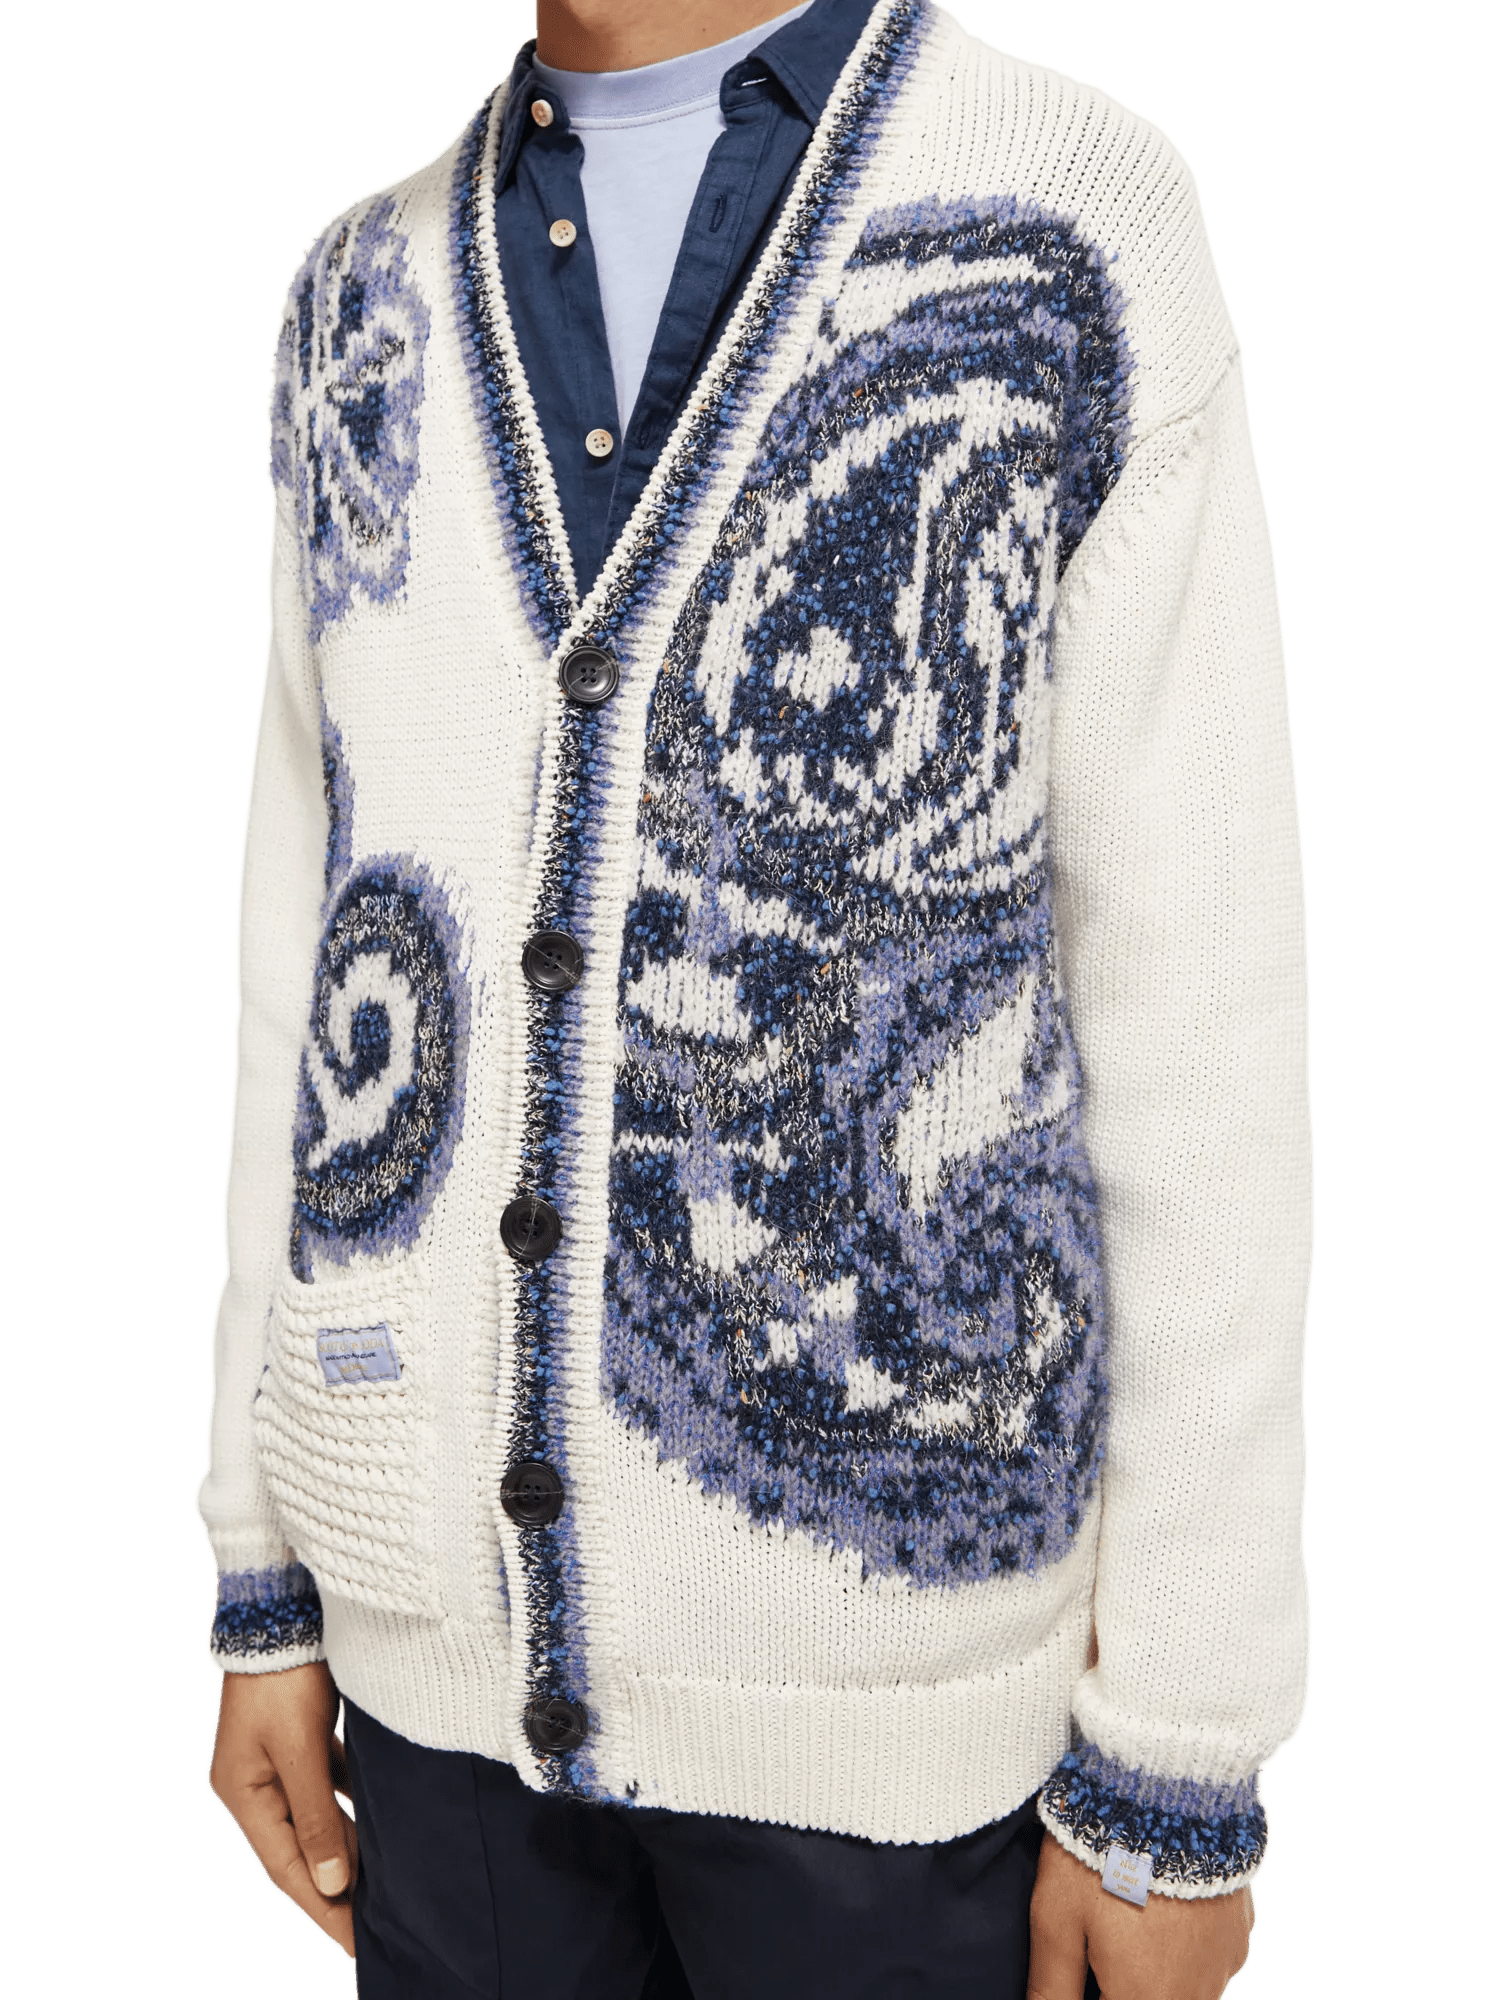 Intarsia knitted cardigan